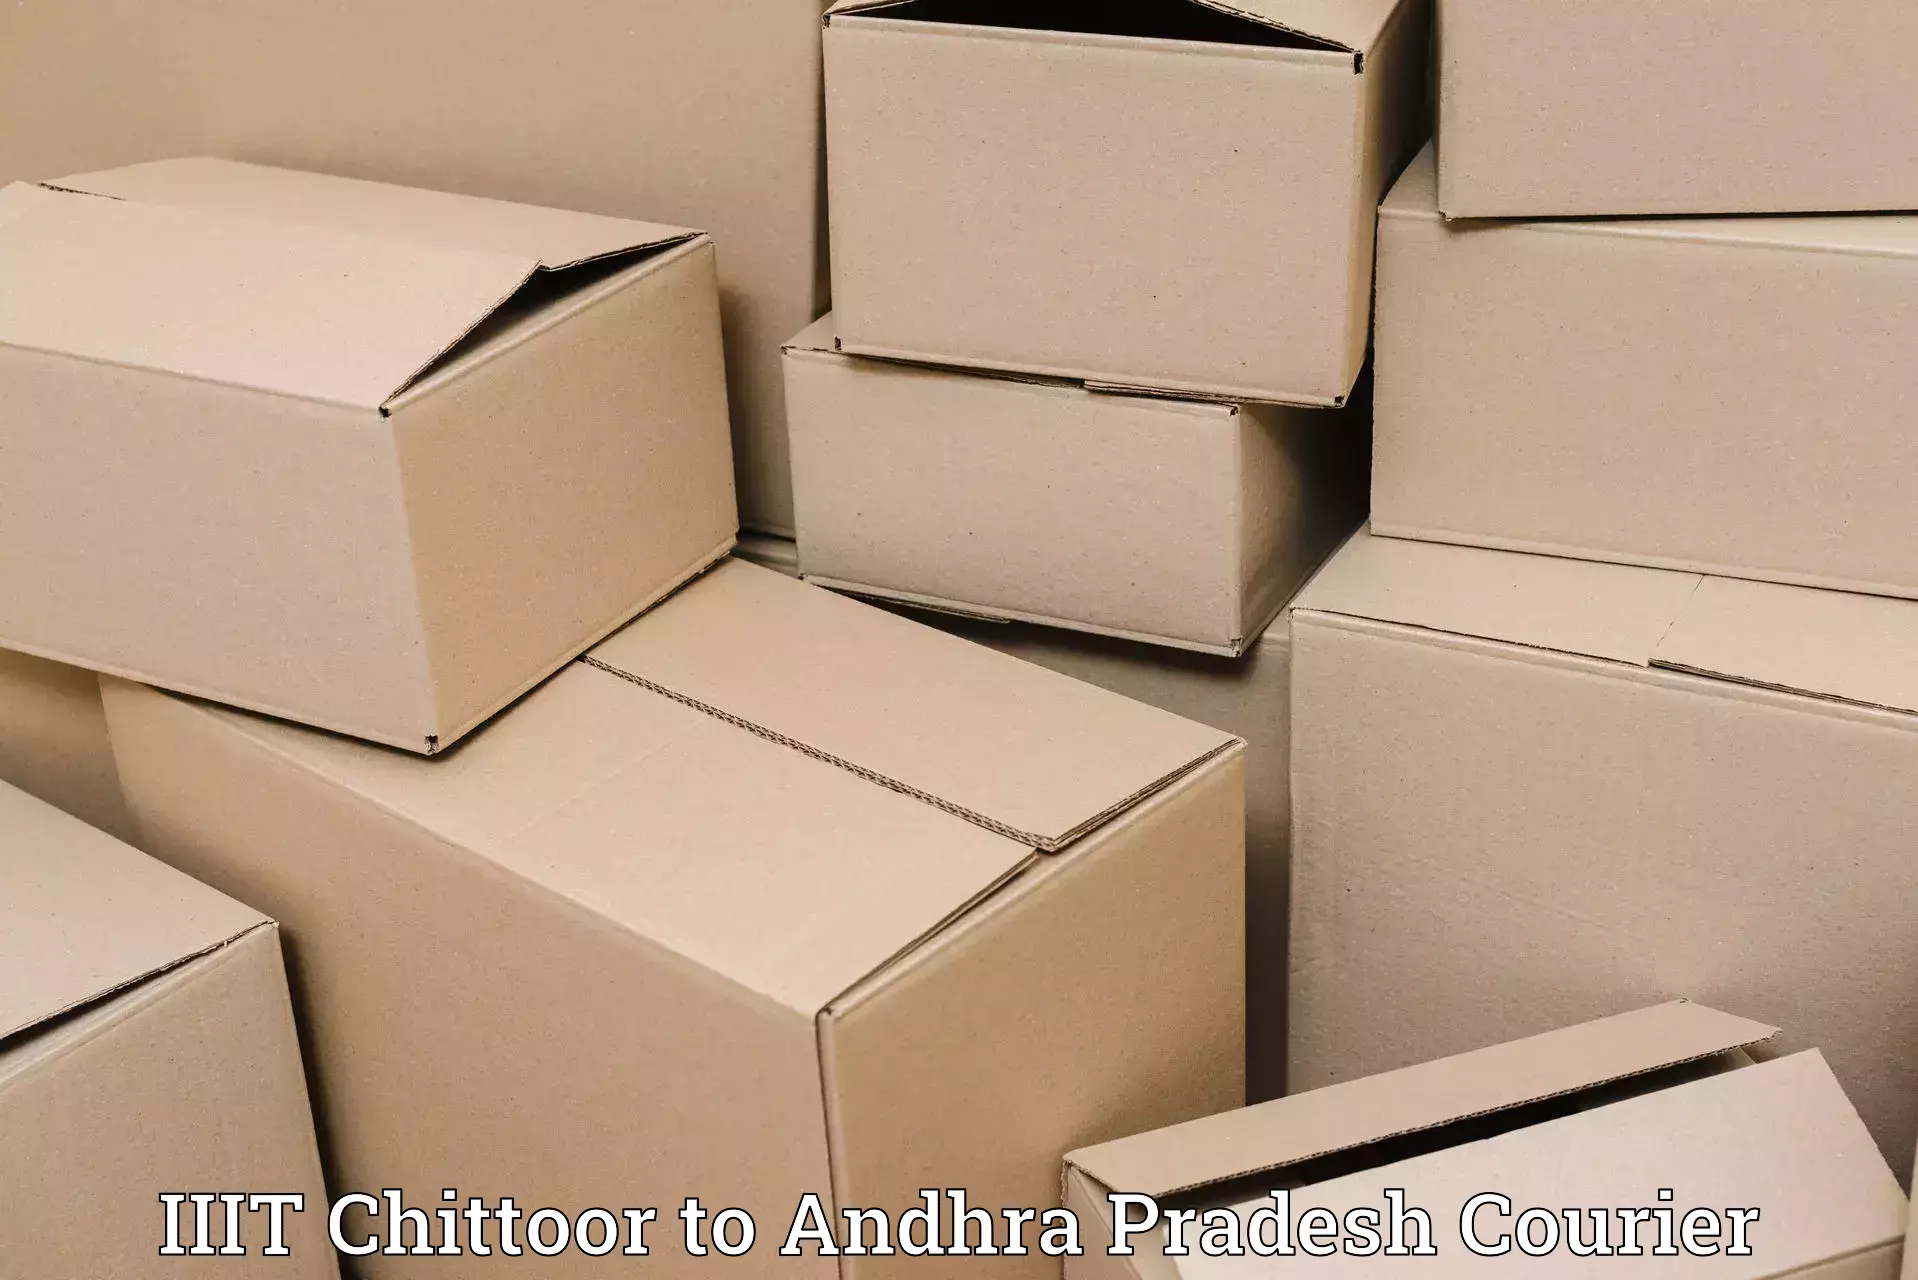 Efficient logistics management IIIT Chittoor to Guntur